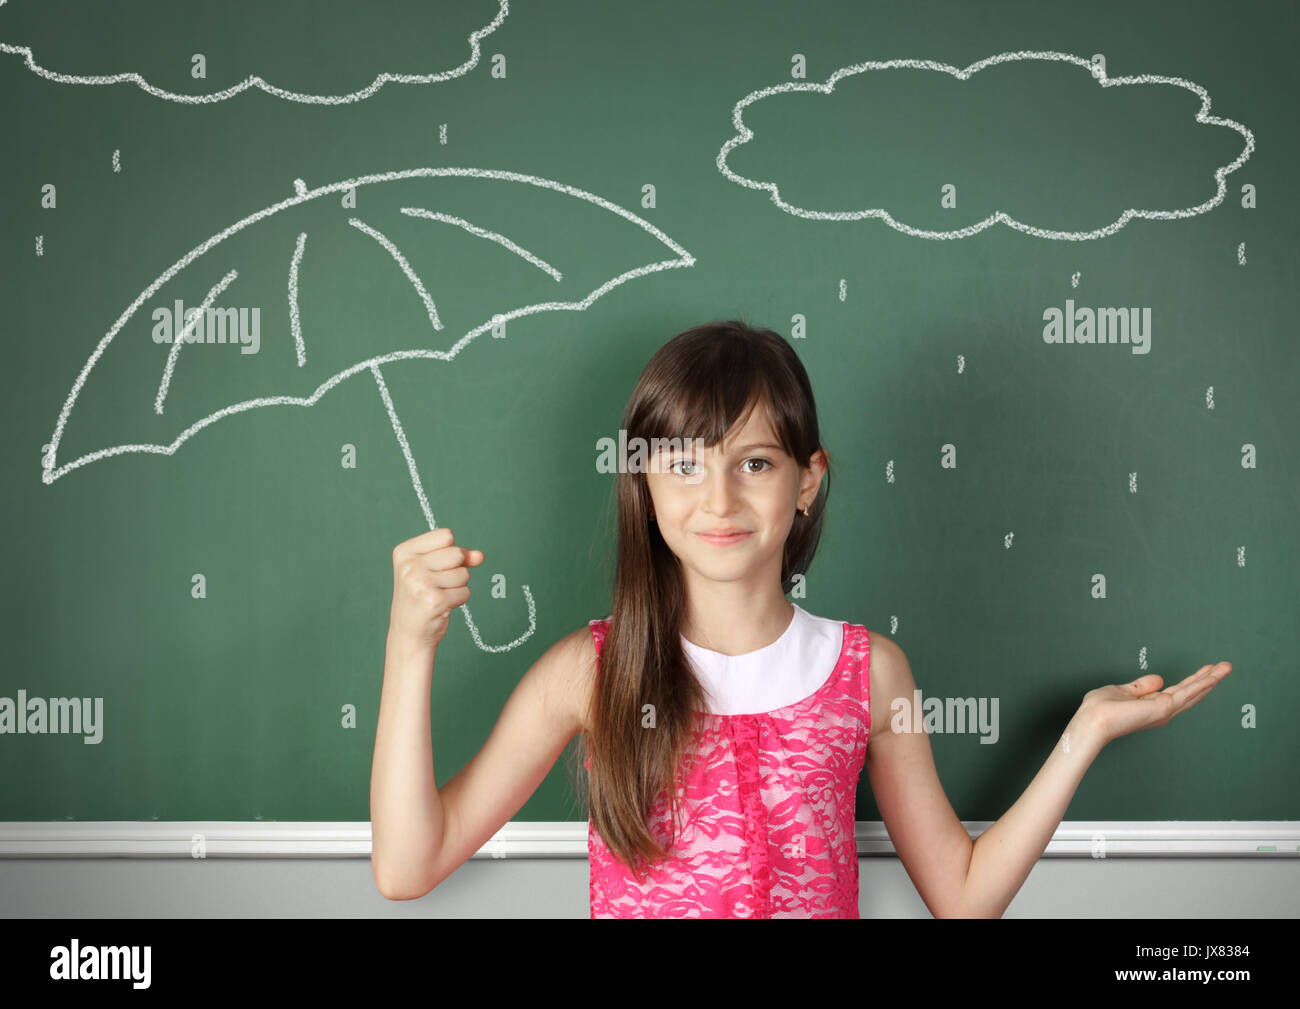 child hold umbrella near school blackboard, weather concept Stock Photo